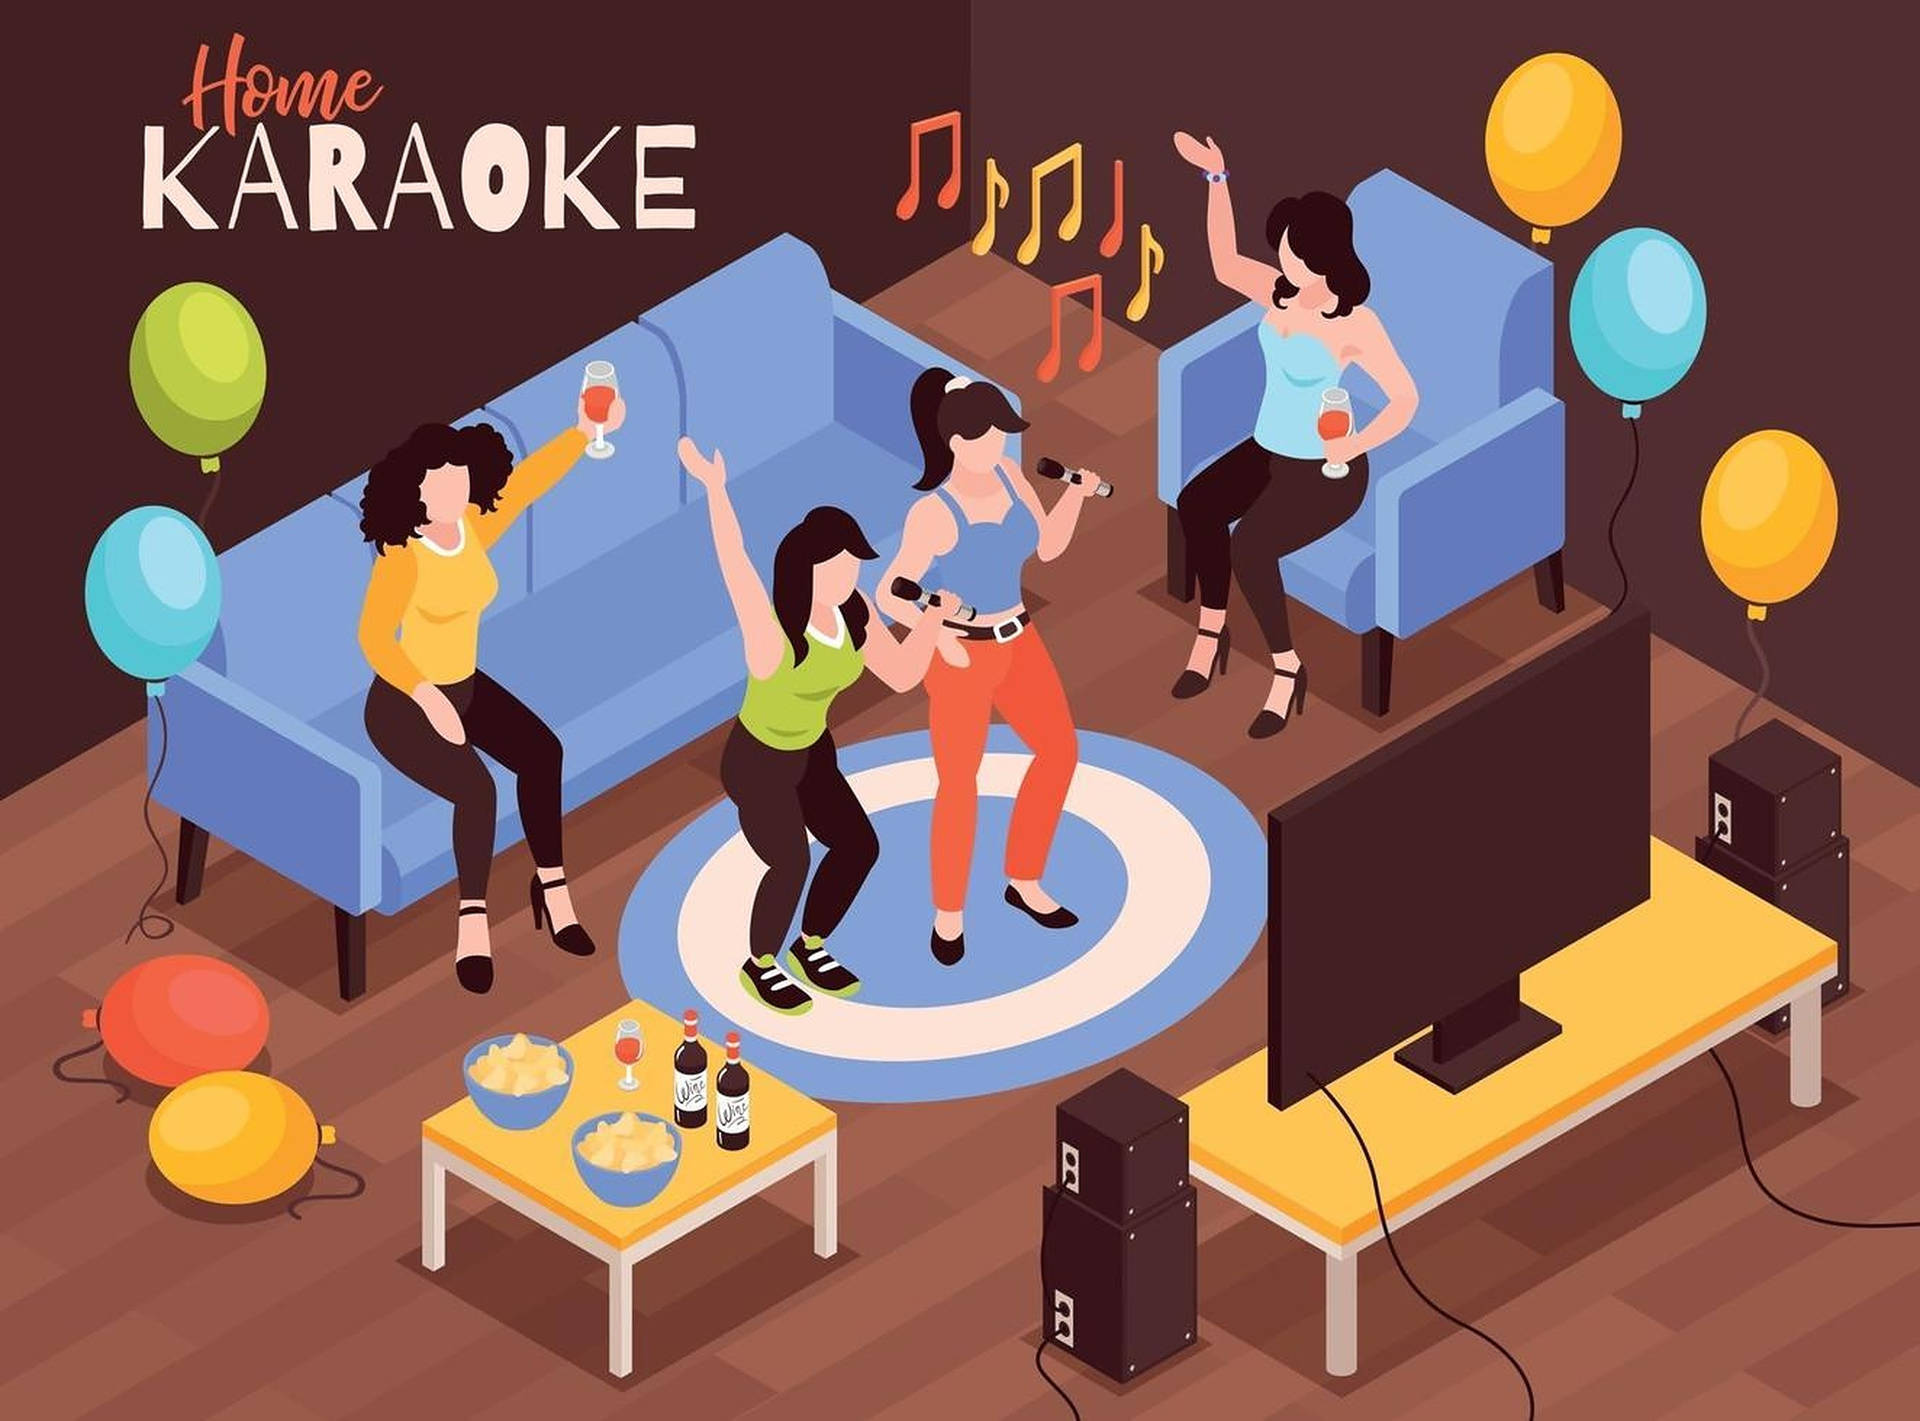 Energetic Home Karaoke Party Background